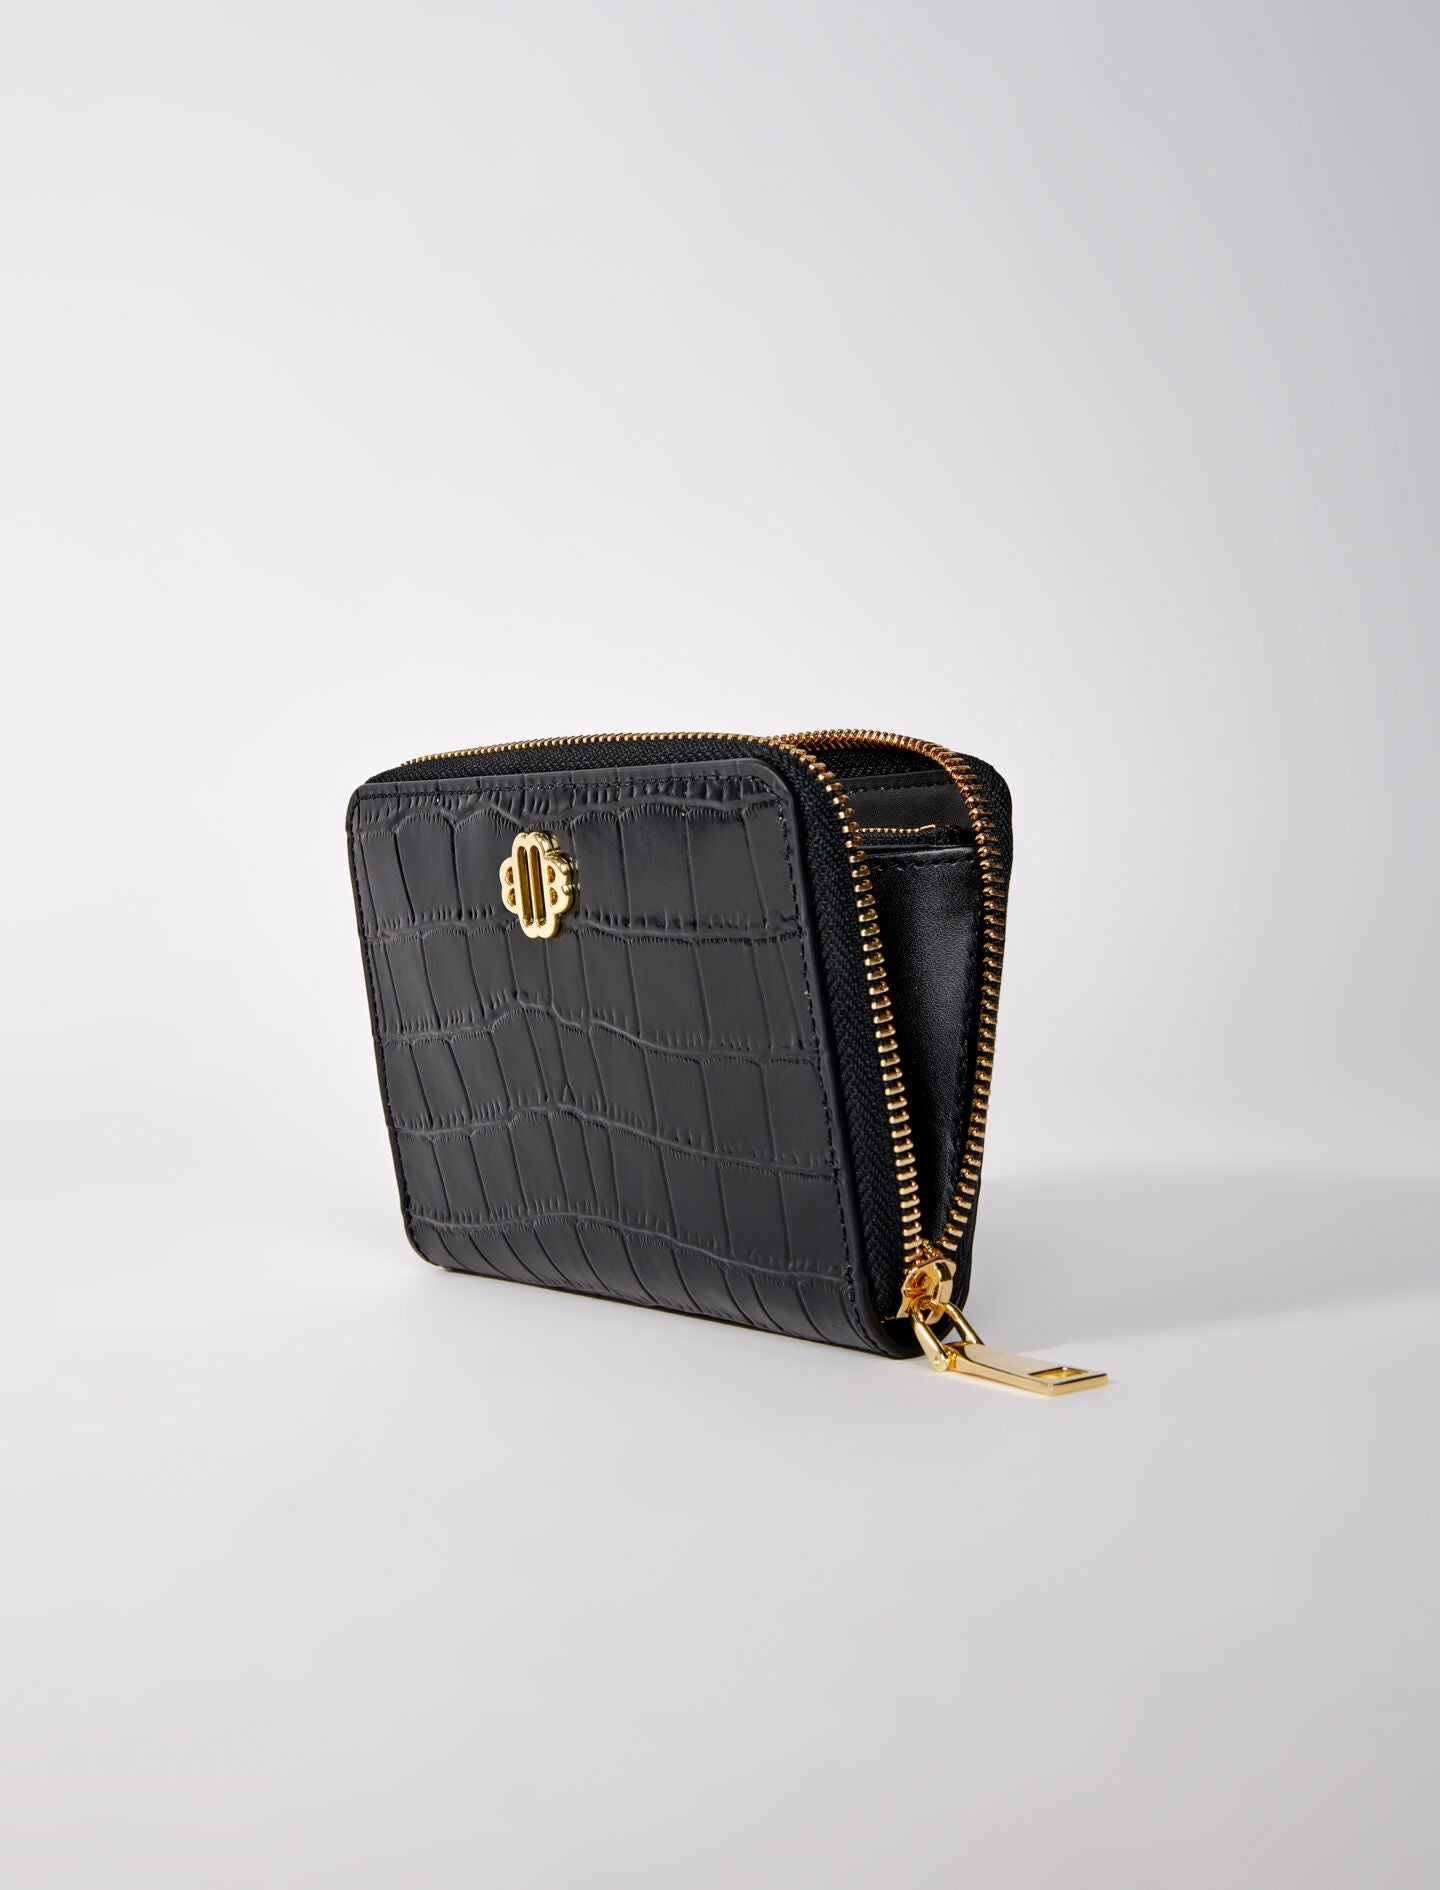 Black-leather wallet